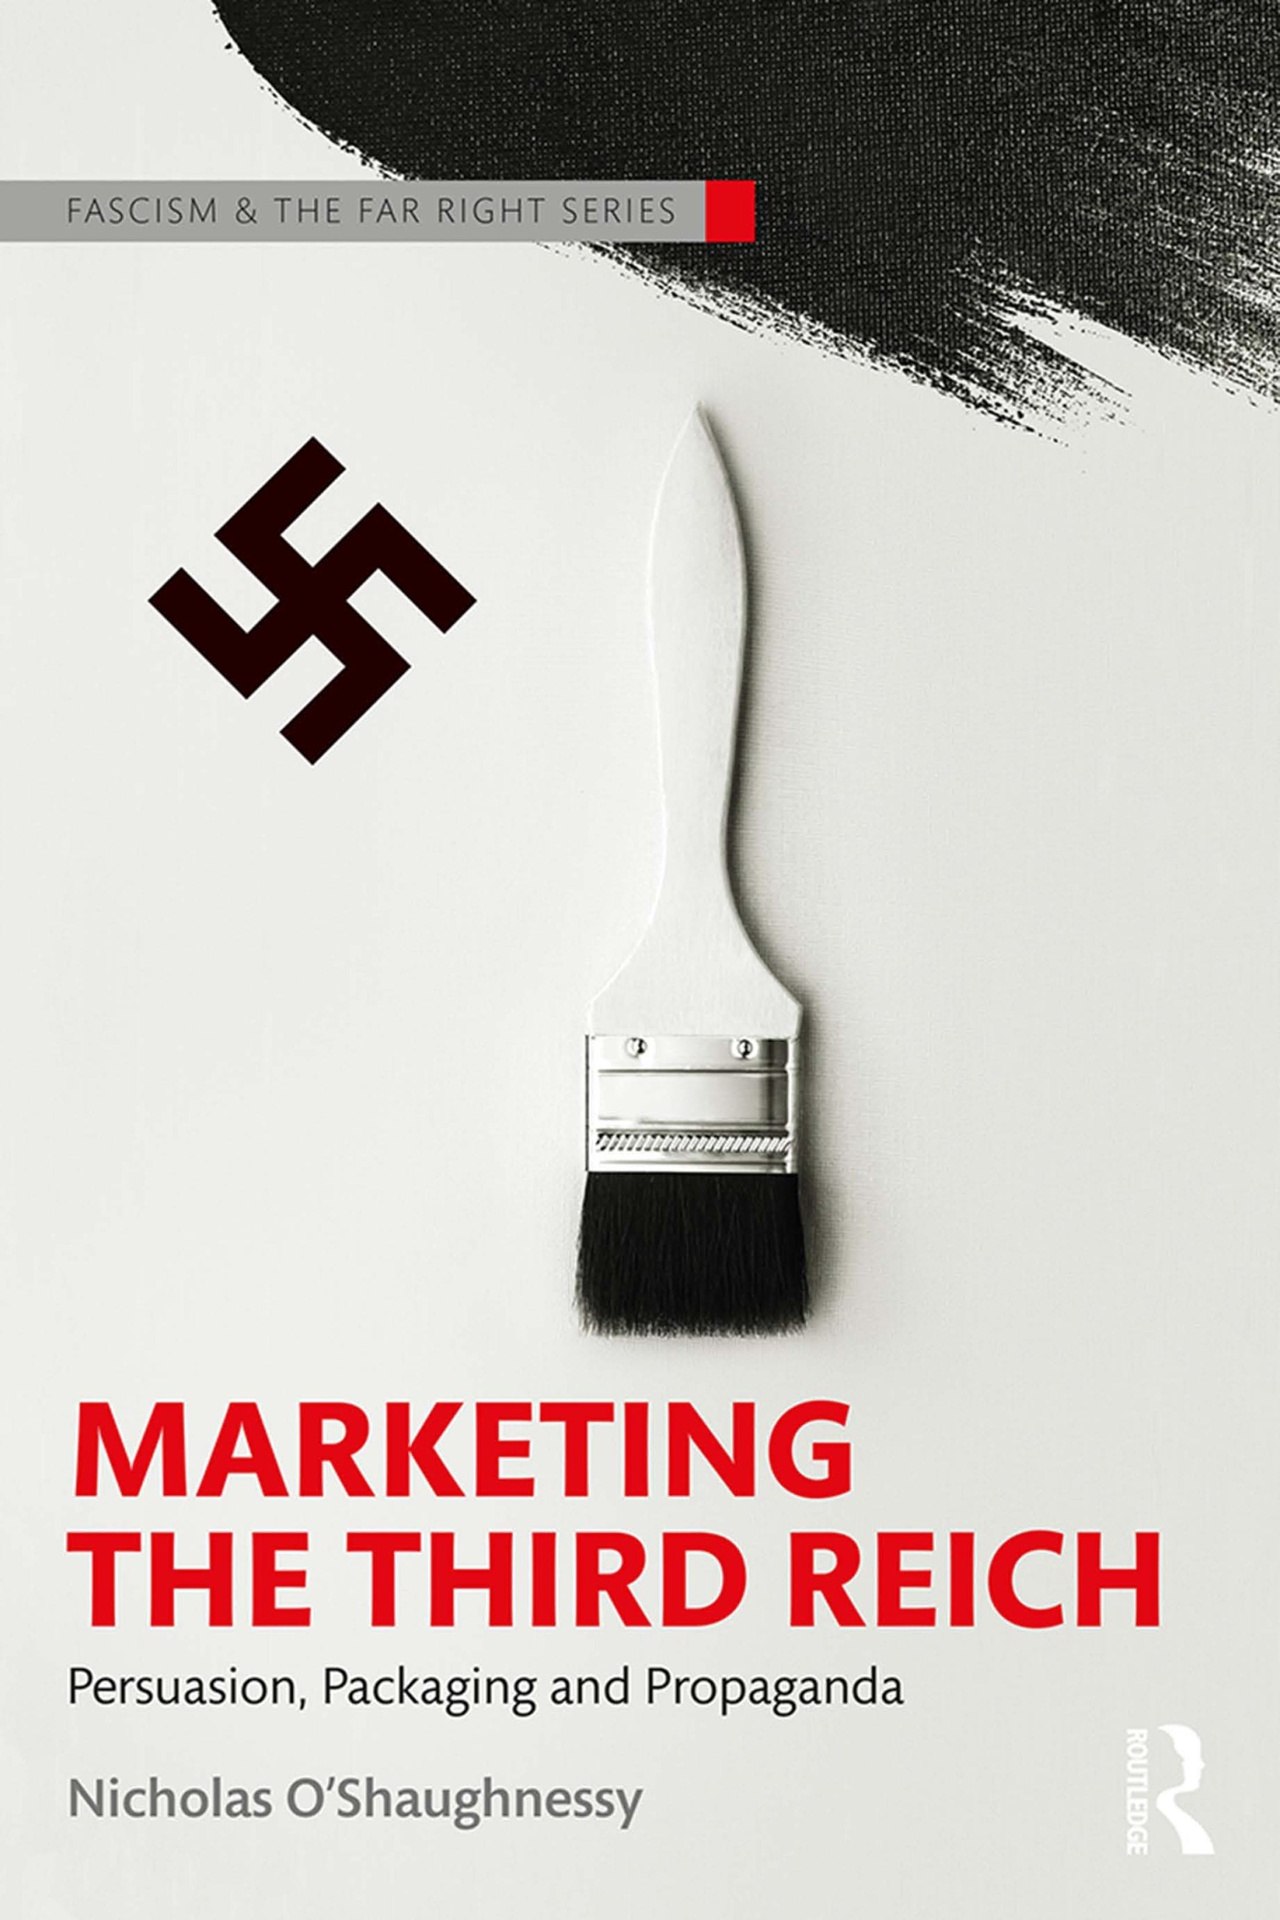 Nicholas O’Shaughnessy – Marketing The Third Reich